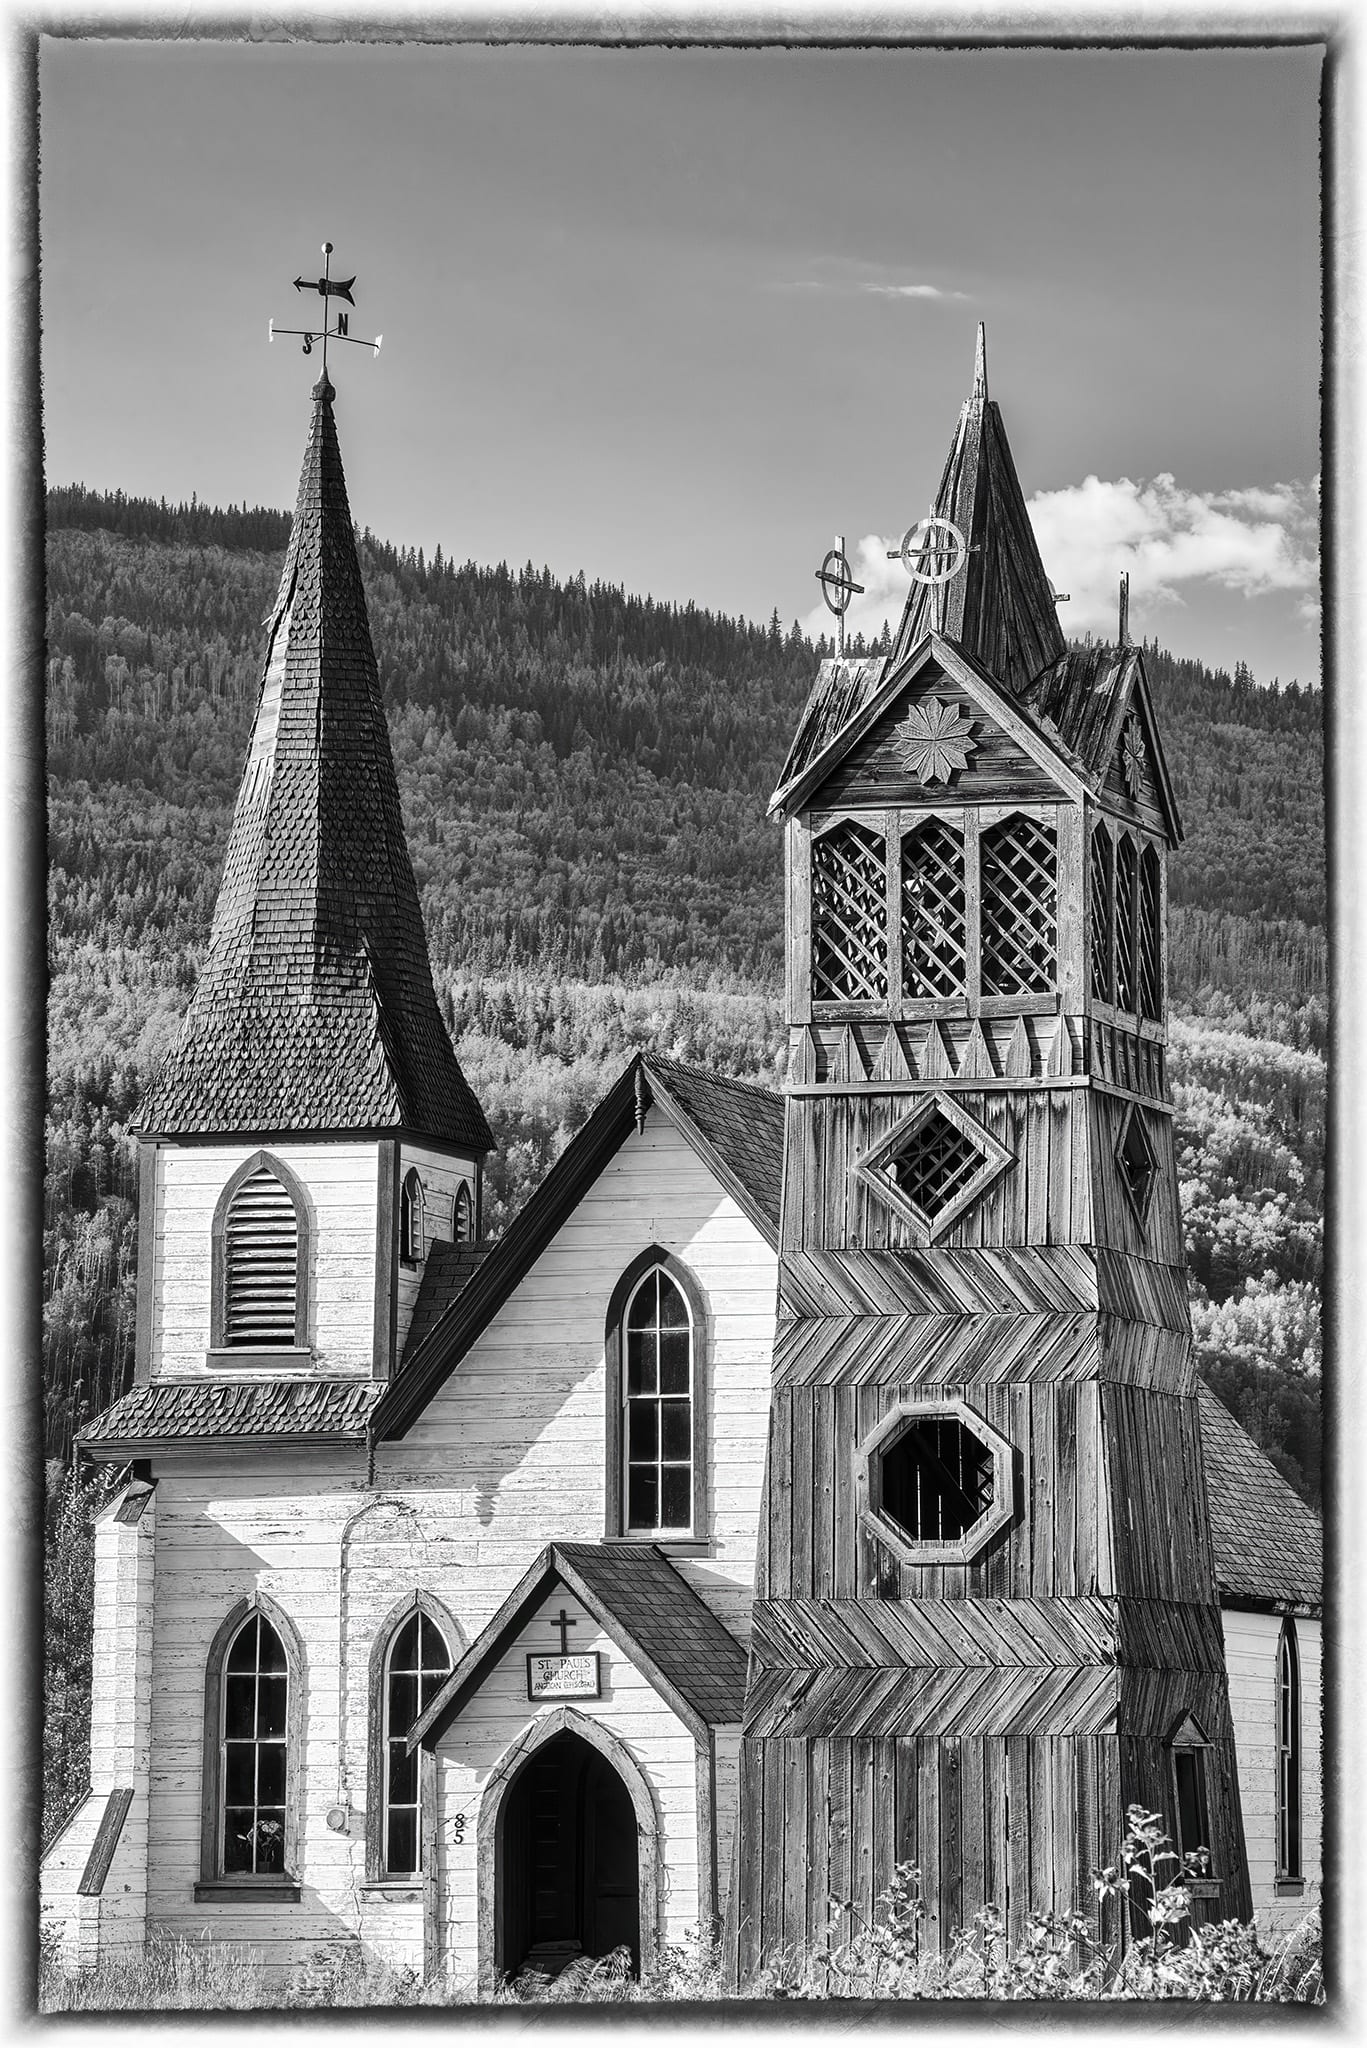 St Paul’s Anglican Church, built in 1893, Kitwanga, British Columbia, Canada.